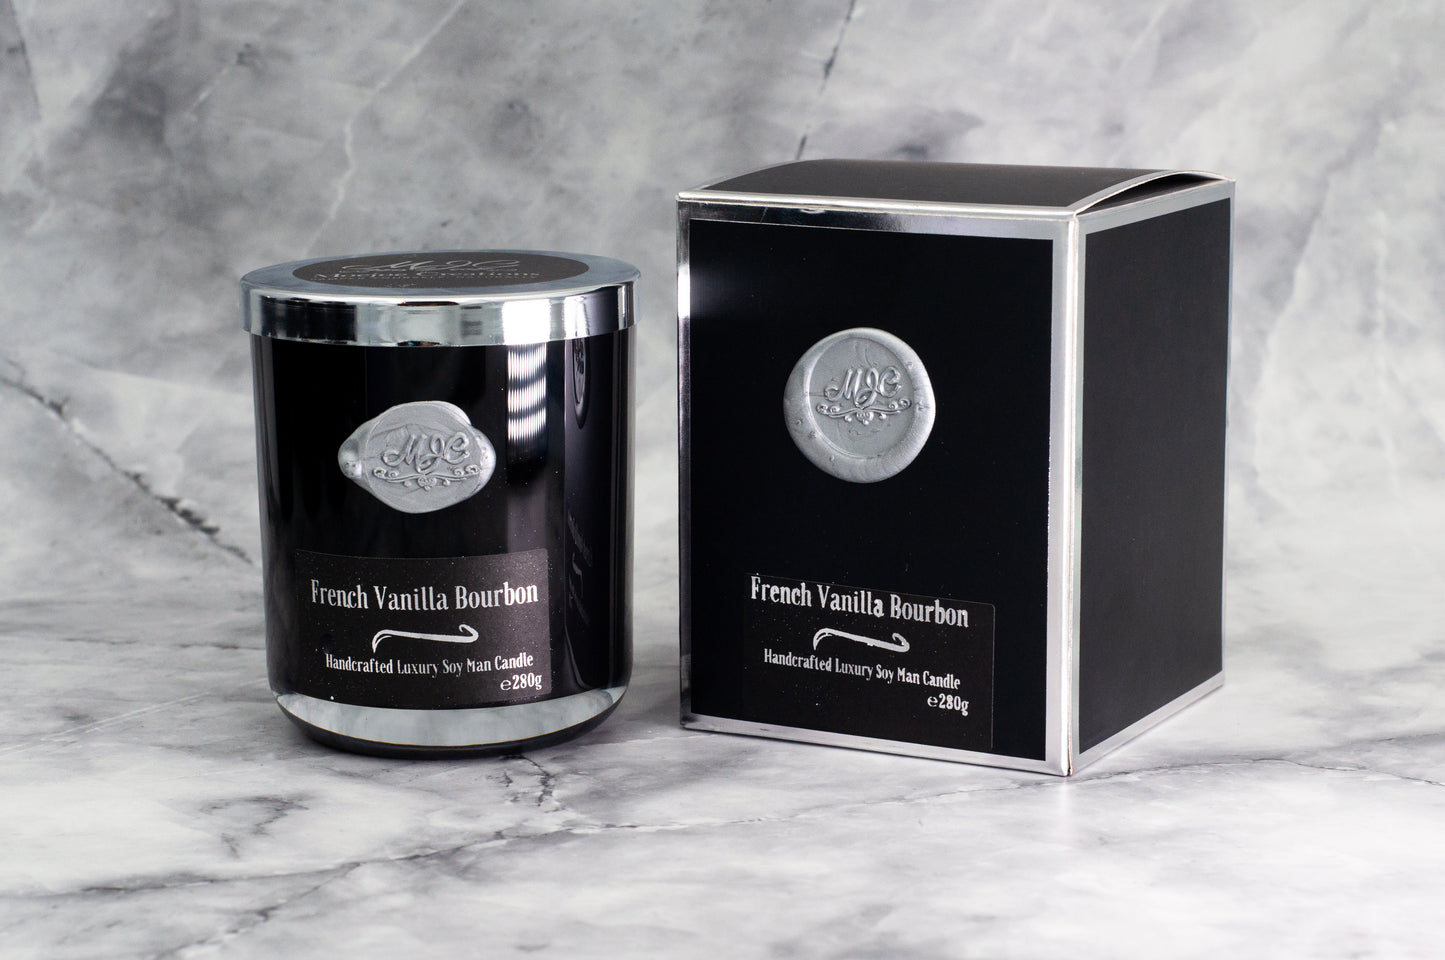 French Vanilla Bourbon Fragrance Man Candle in Large Black Tumbler 285g/10oz